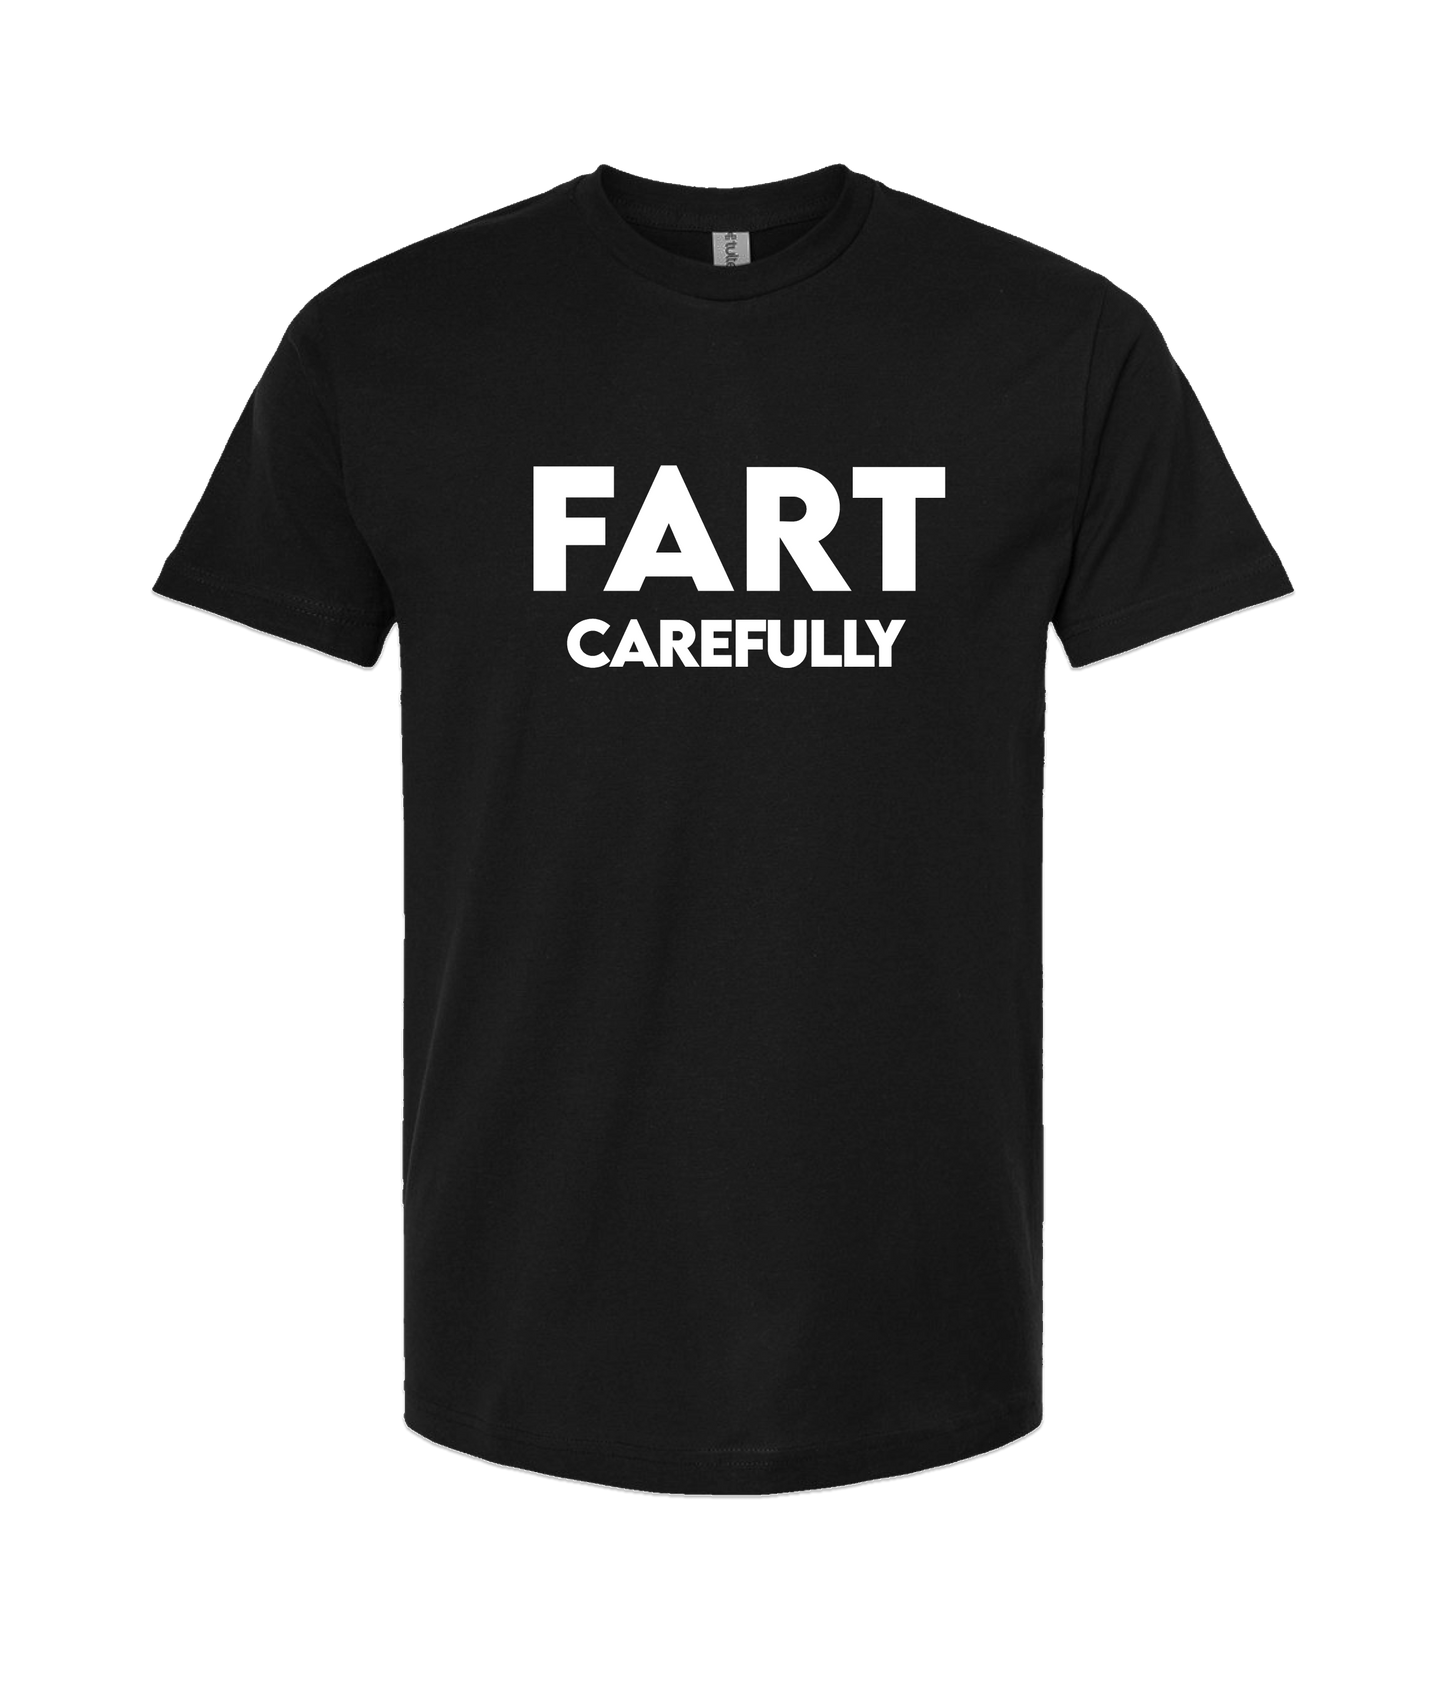 iFart - CAREFULLY - Black T-Shirt